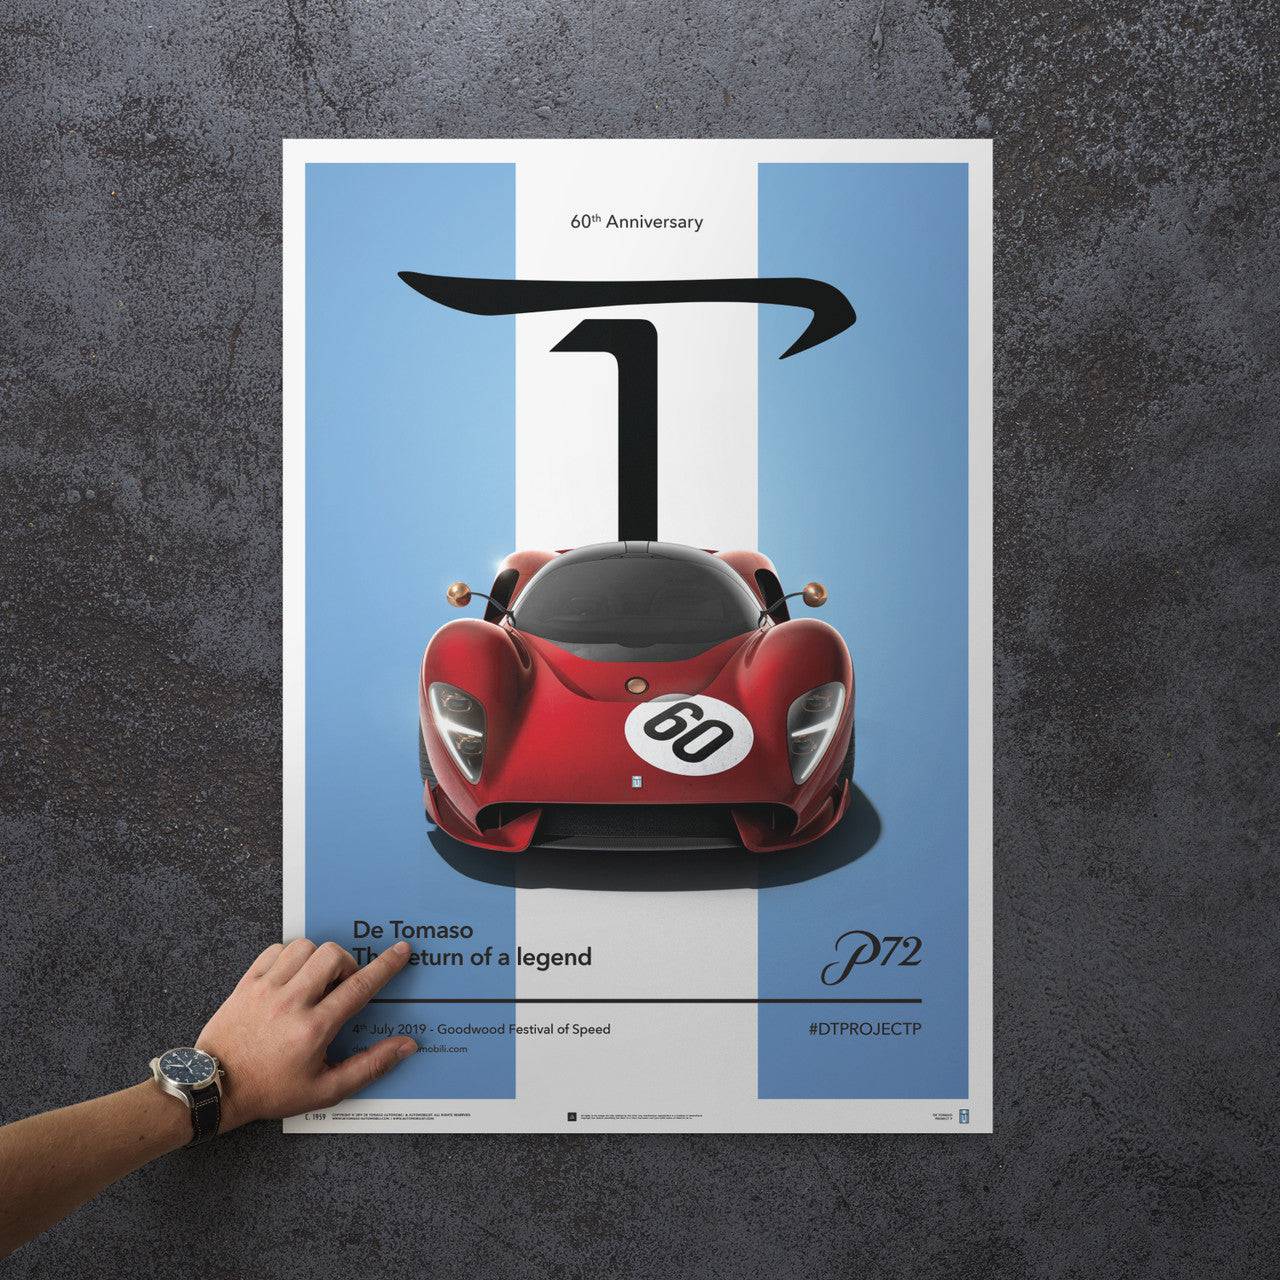 De Tomaso Project P - Front view - 2019 - Poster